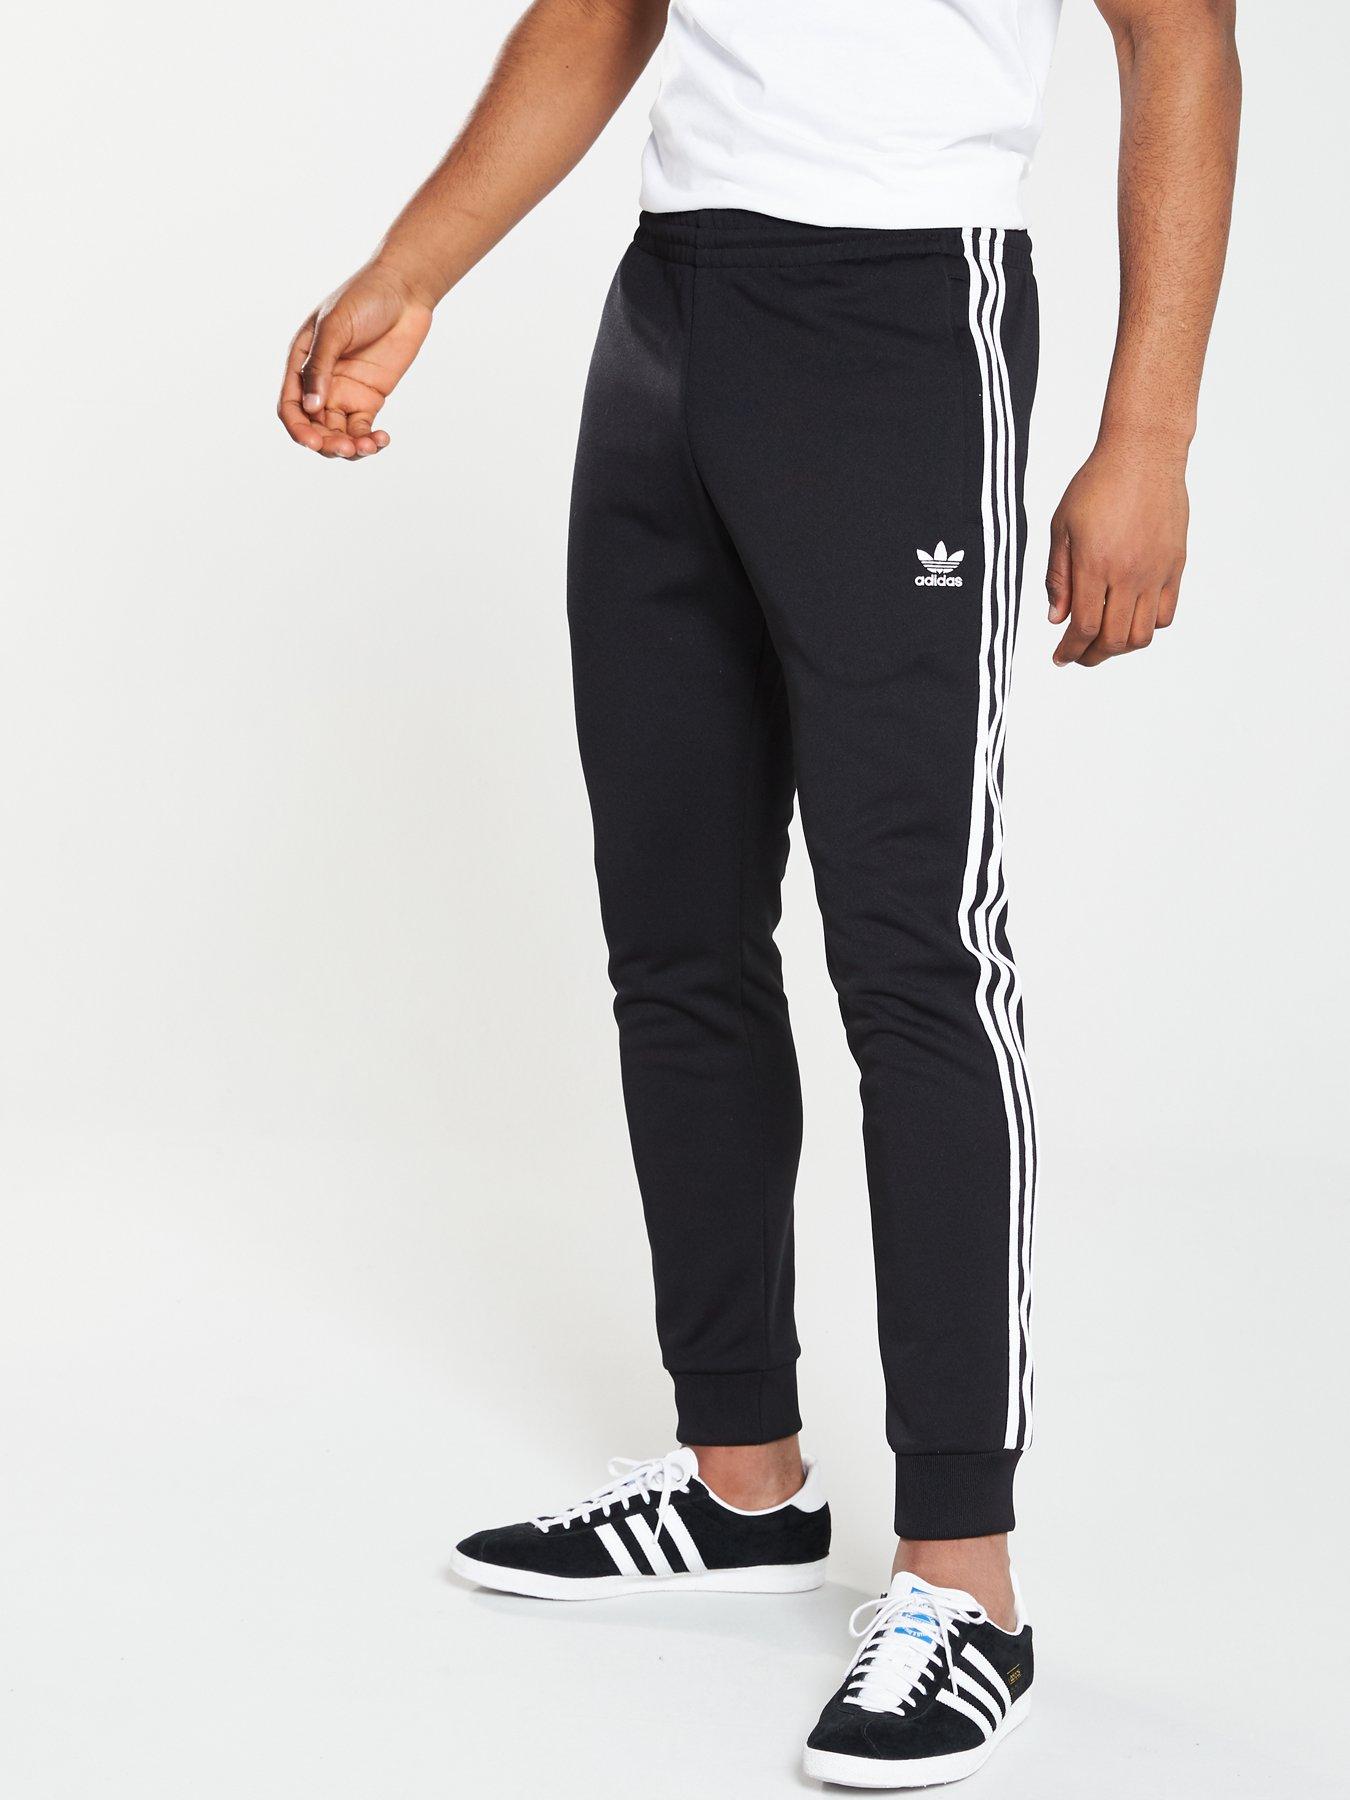 adidas Originals Superstar Track Pants - Black | very.co.uk